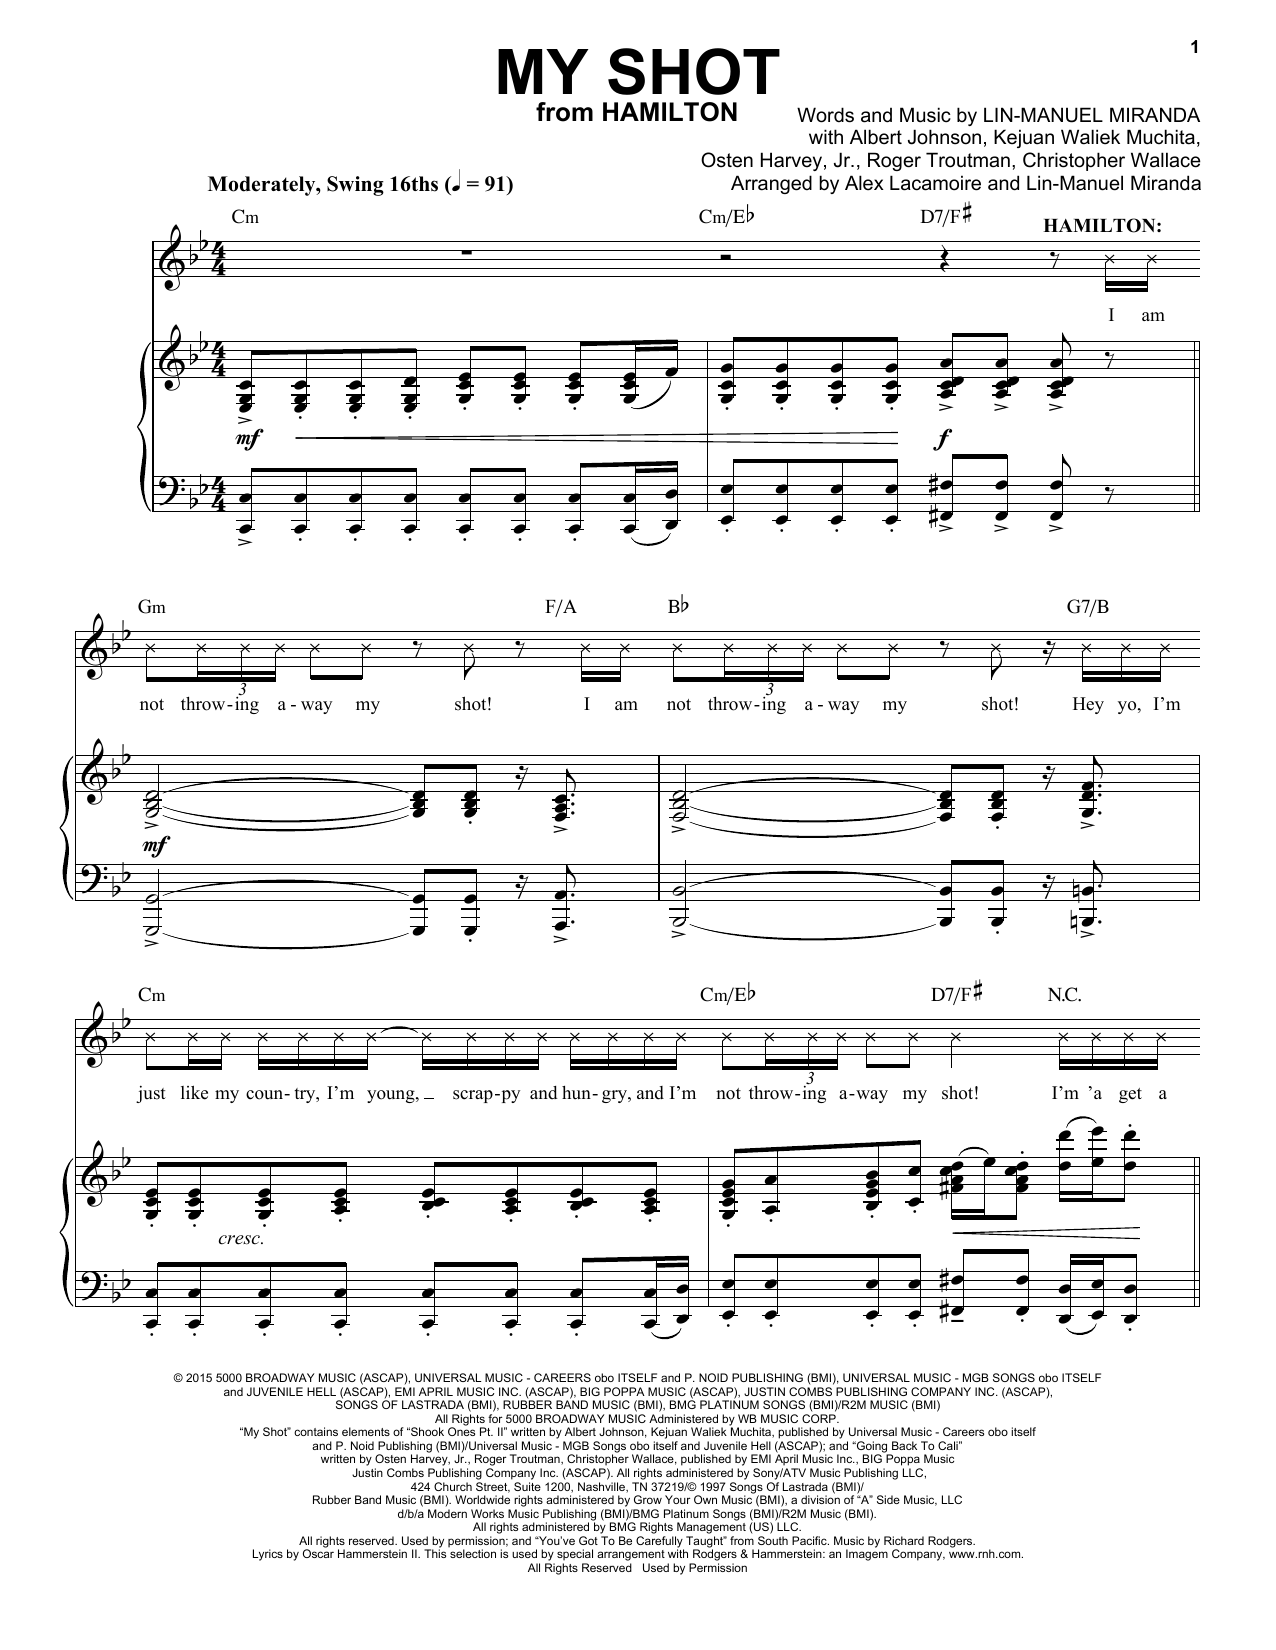 Lin-Manuel Miranda My Shot (from Hamilton) Sheet Music Notes & Chords for Piano & Vocal - Download or Print PDF